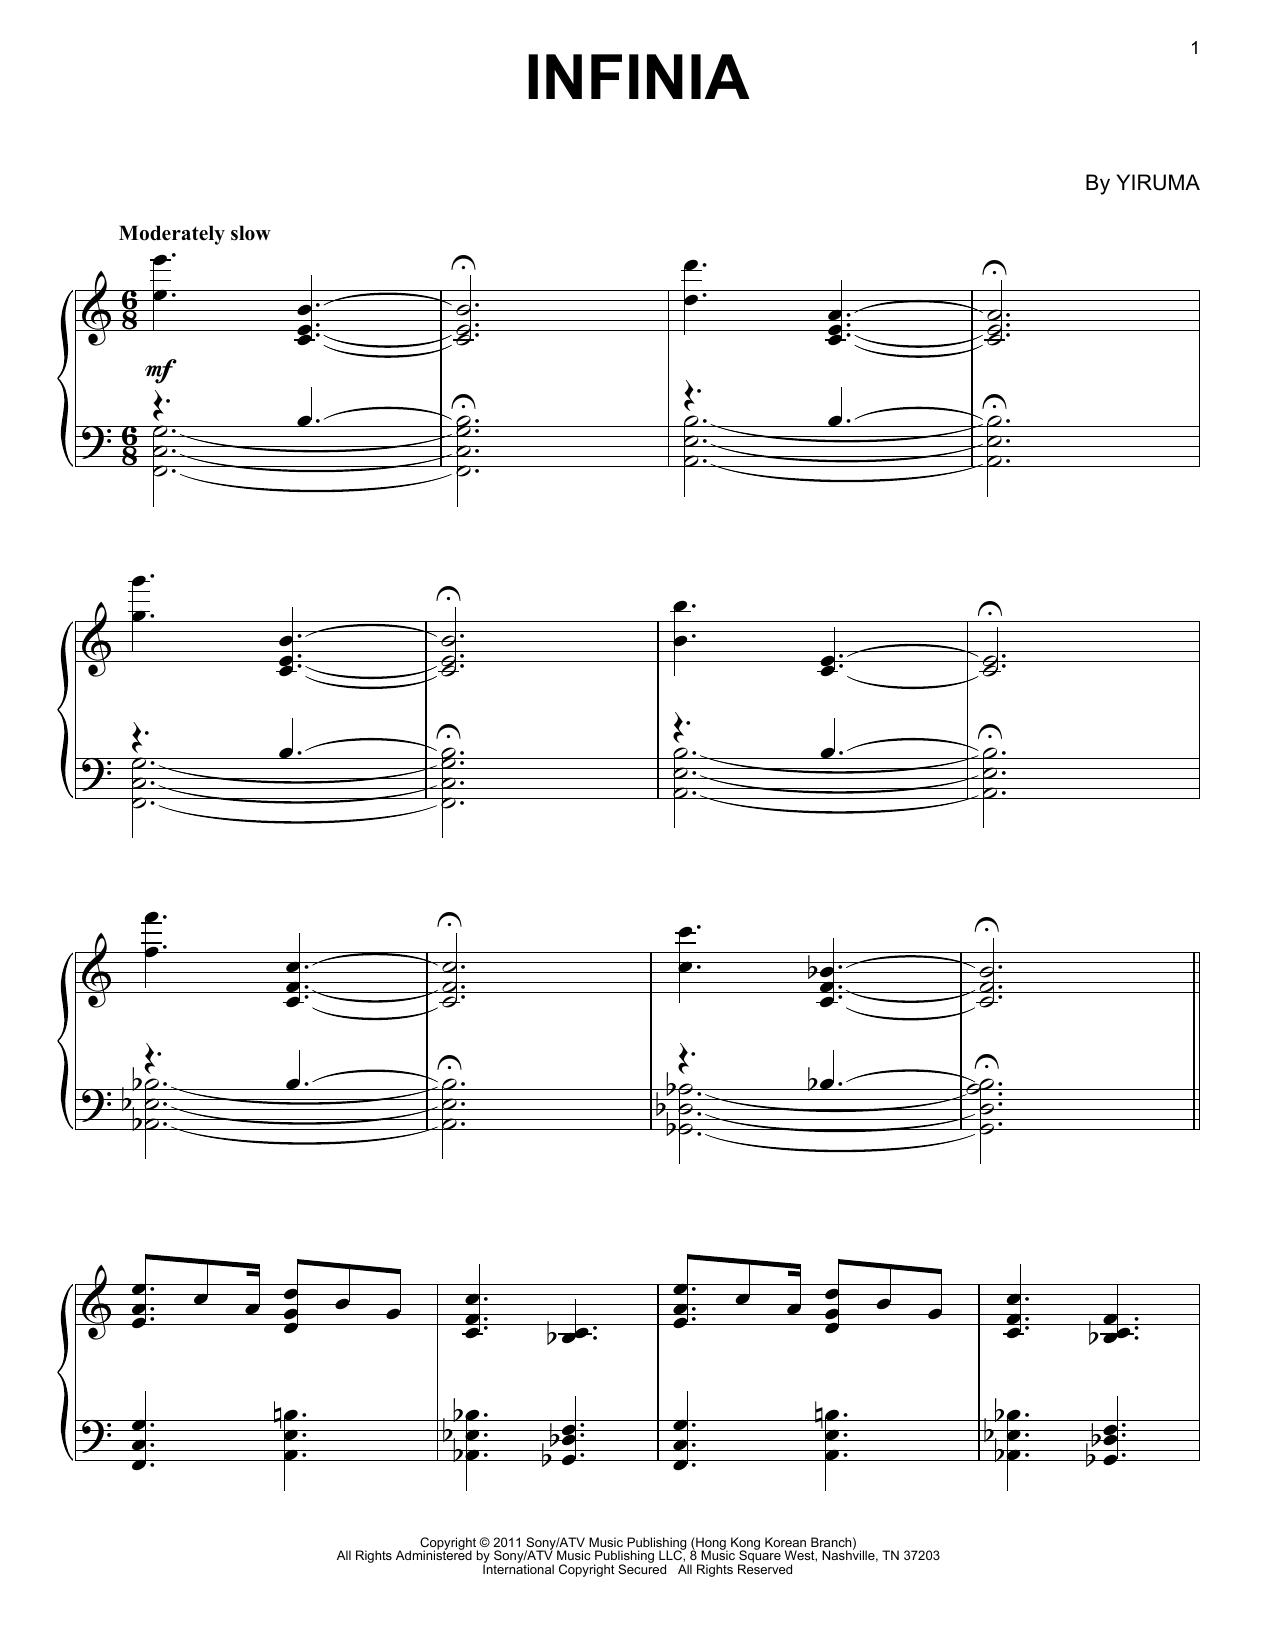 Yiruma Infinia Sheet Music Notes & Chords for Piano - Download or Print PDF